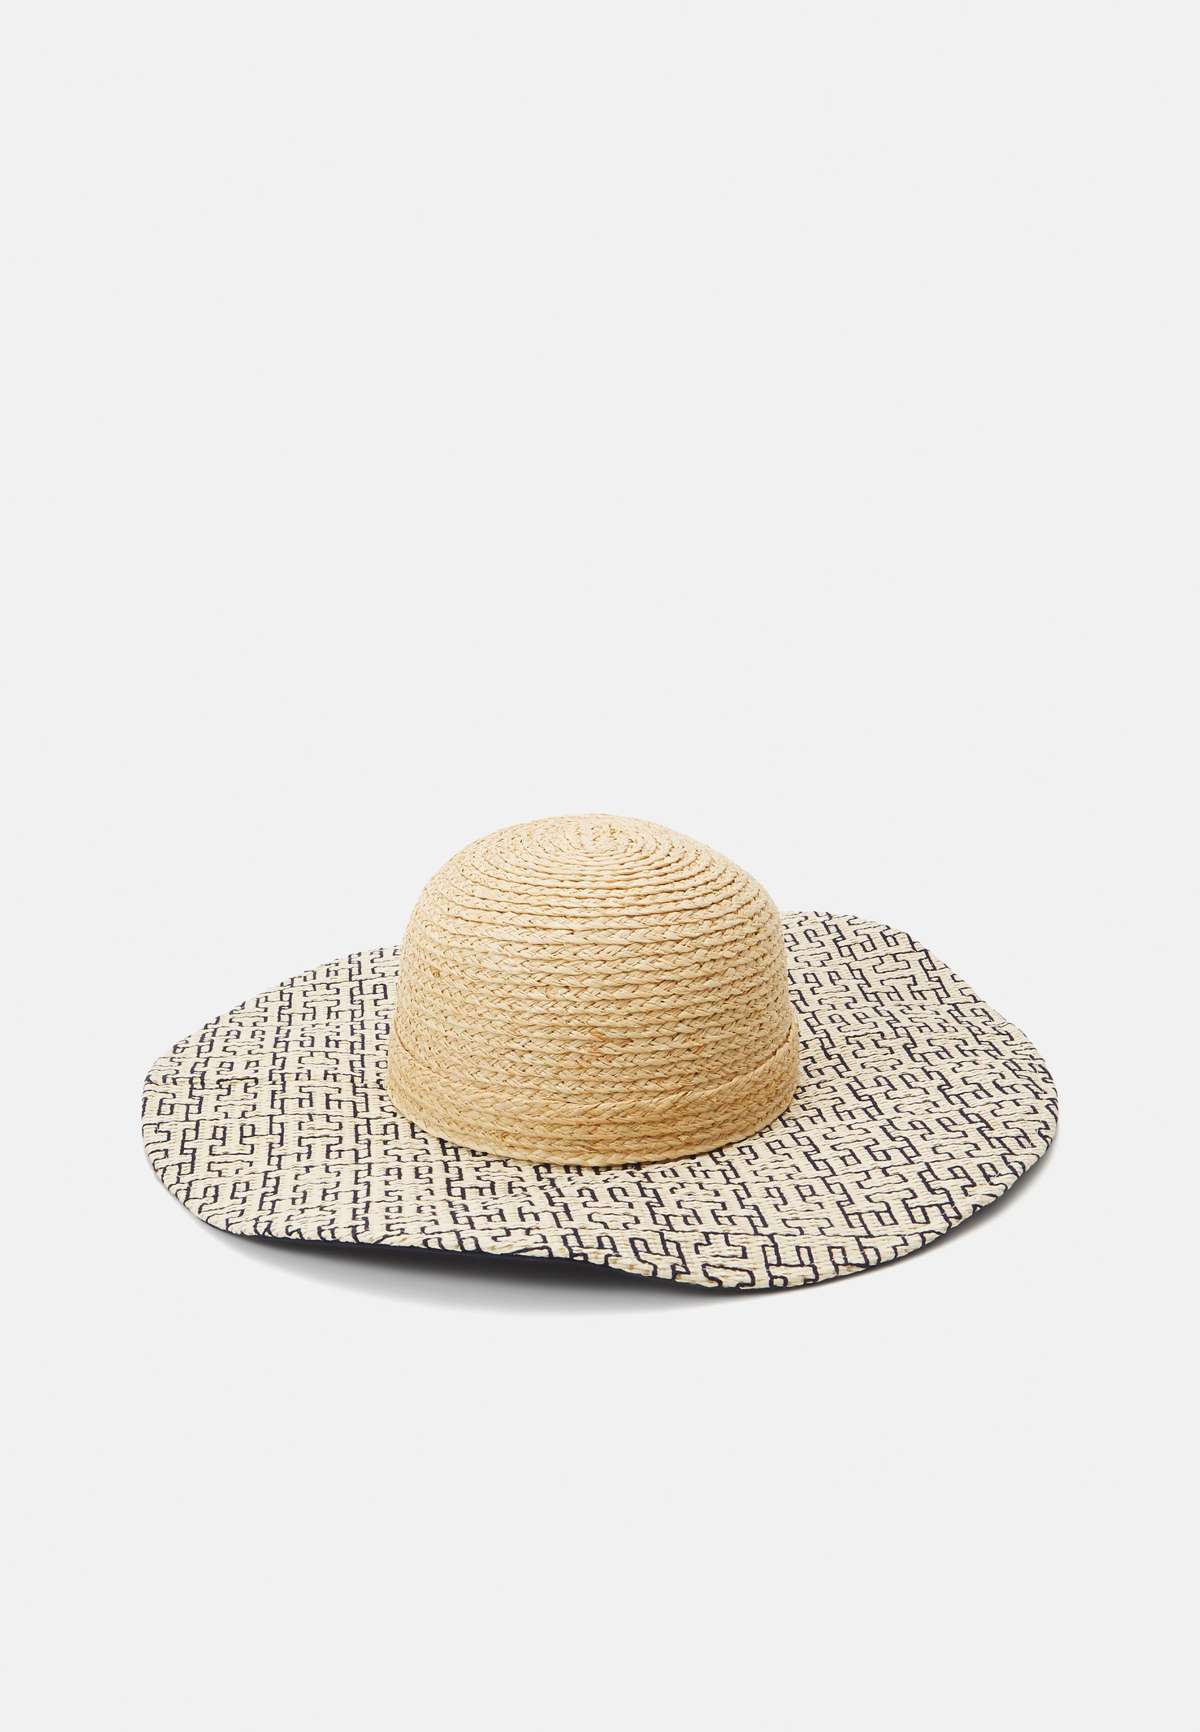 Шляпа BEACH SUMMER HAT